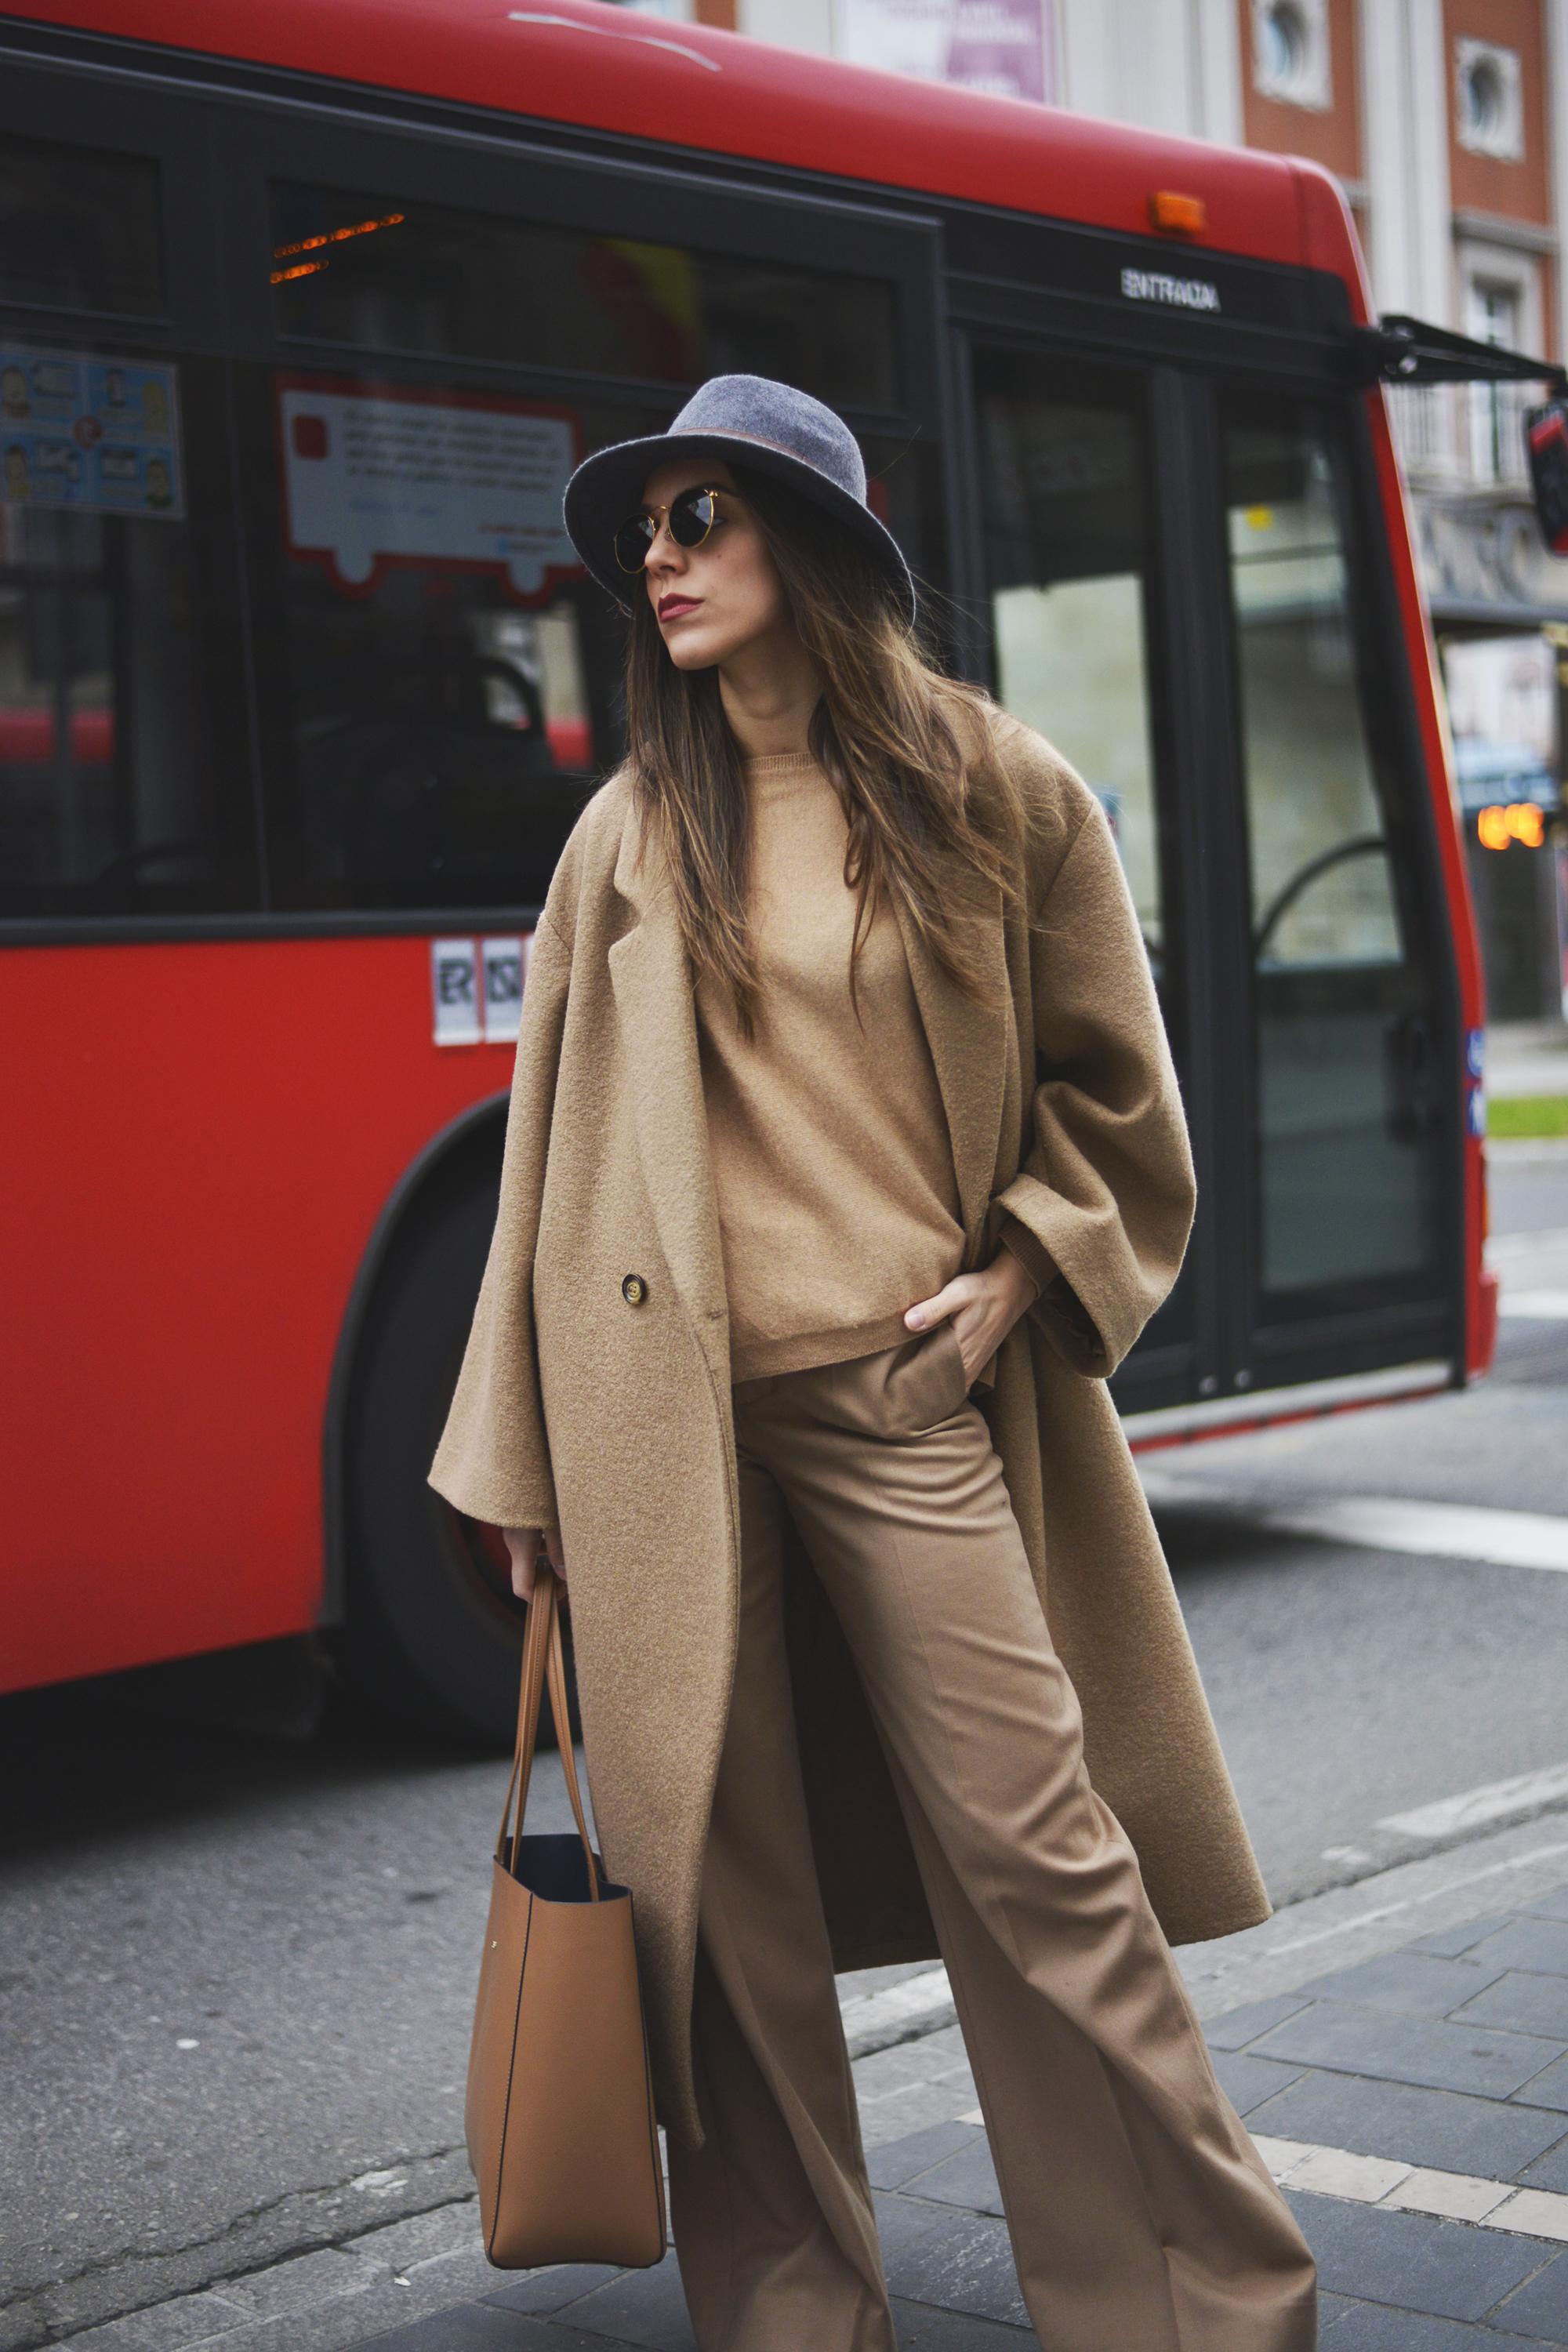 Camel on camel | The fashion through my eyes | Bloglovin’